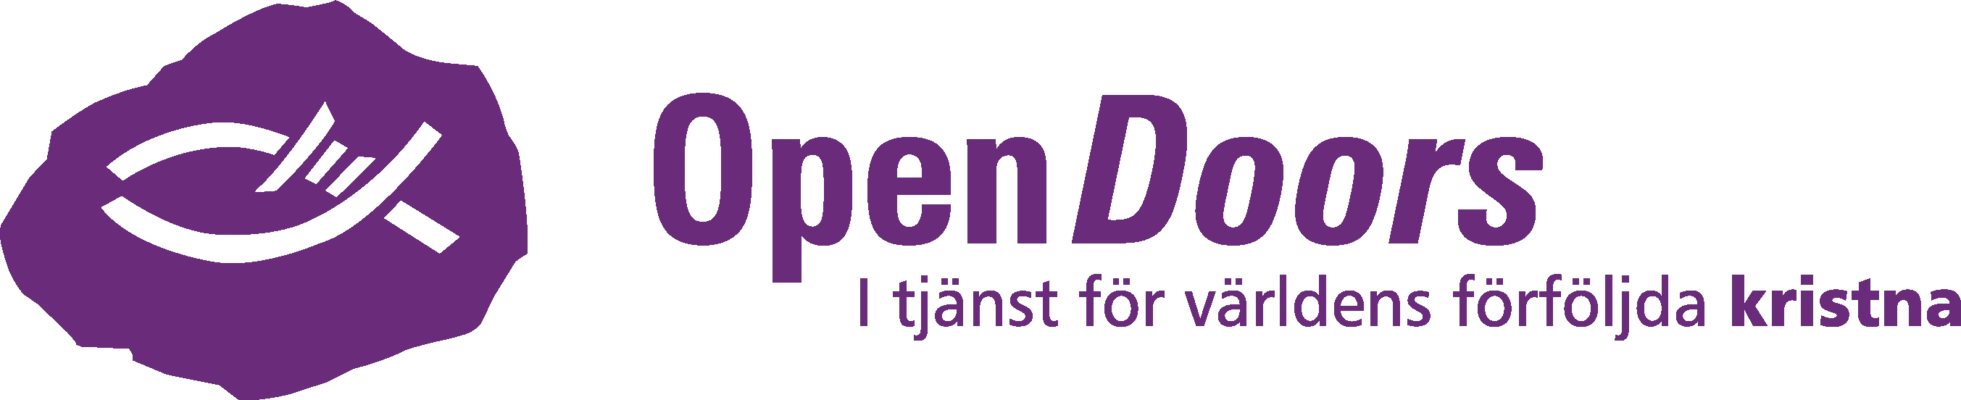 Profile image for Open Doors Sverige